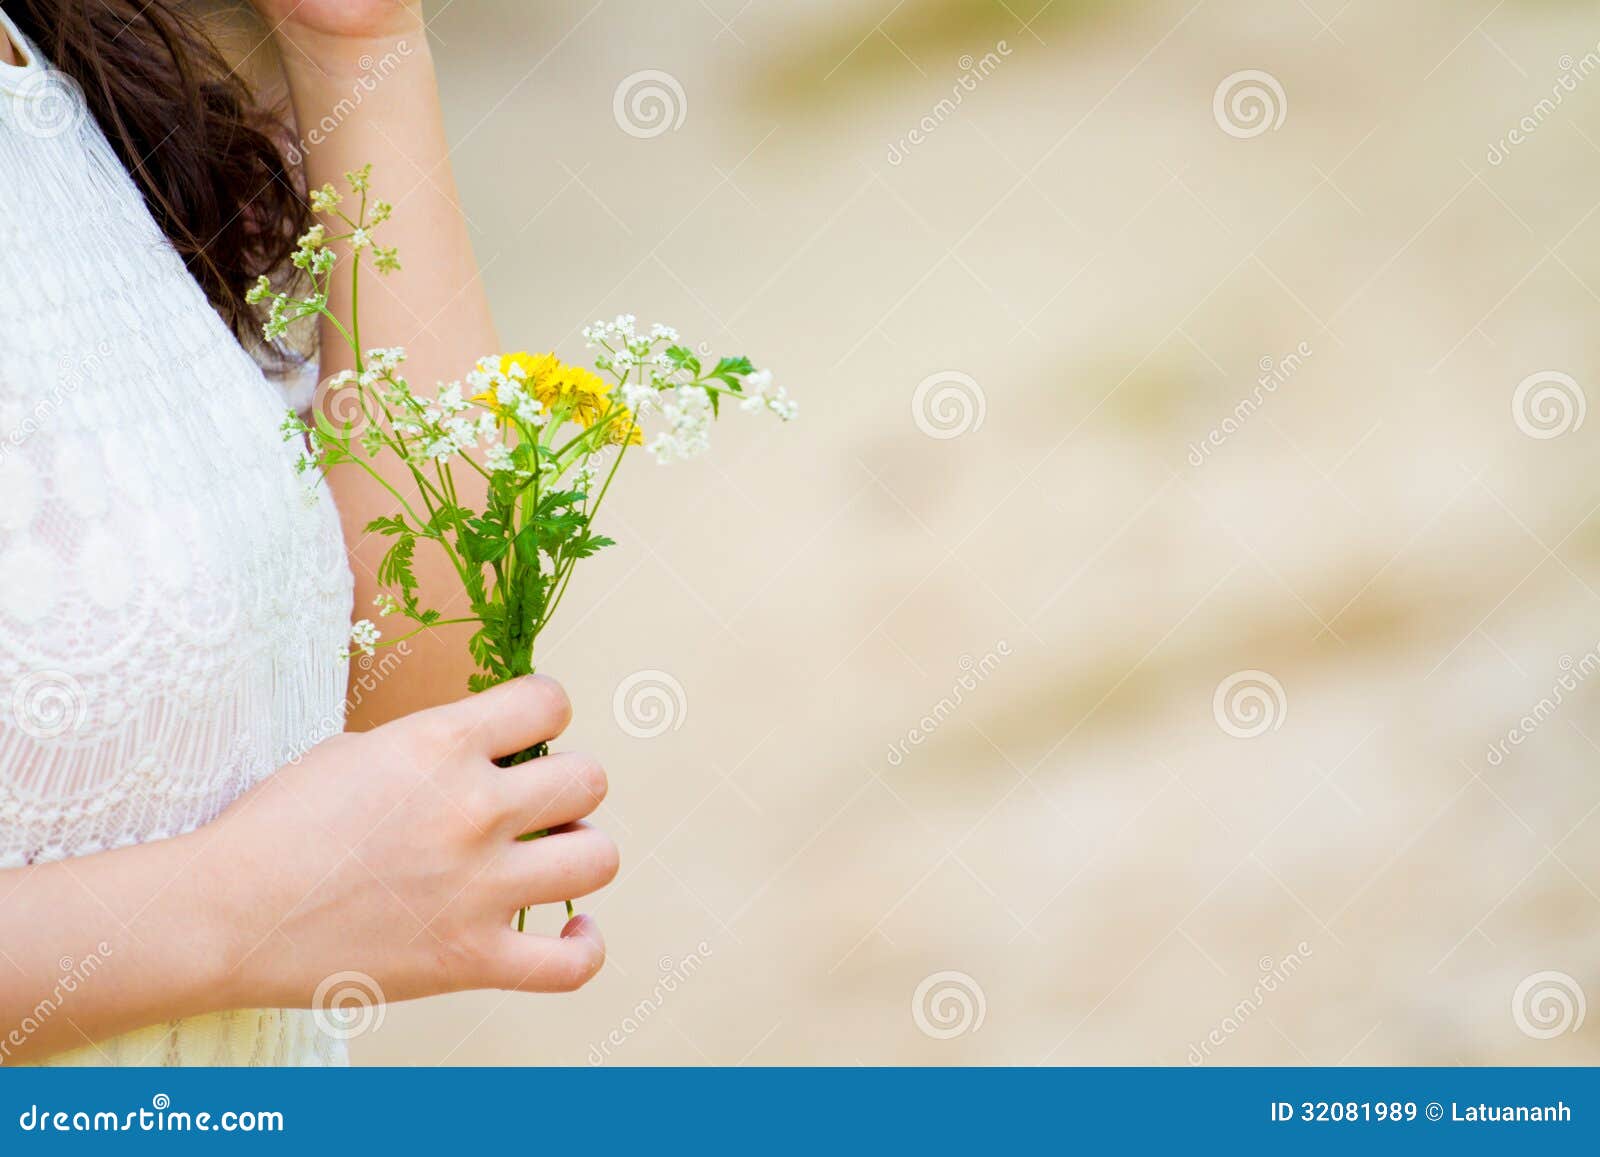 girl flower her hand long hair hold waiting someone 32081989